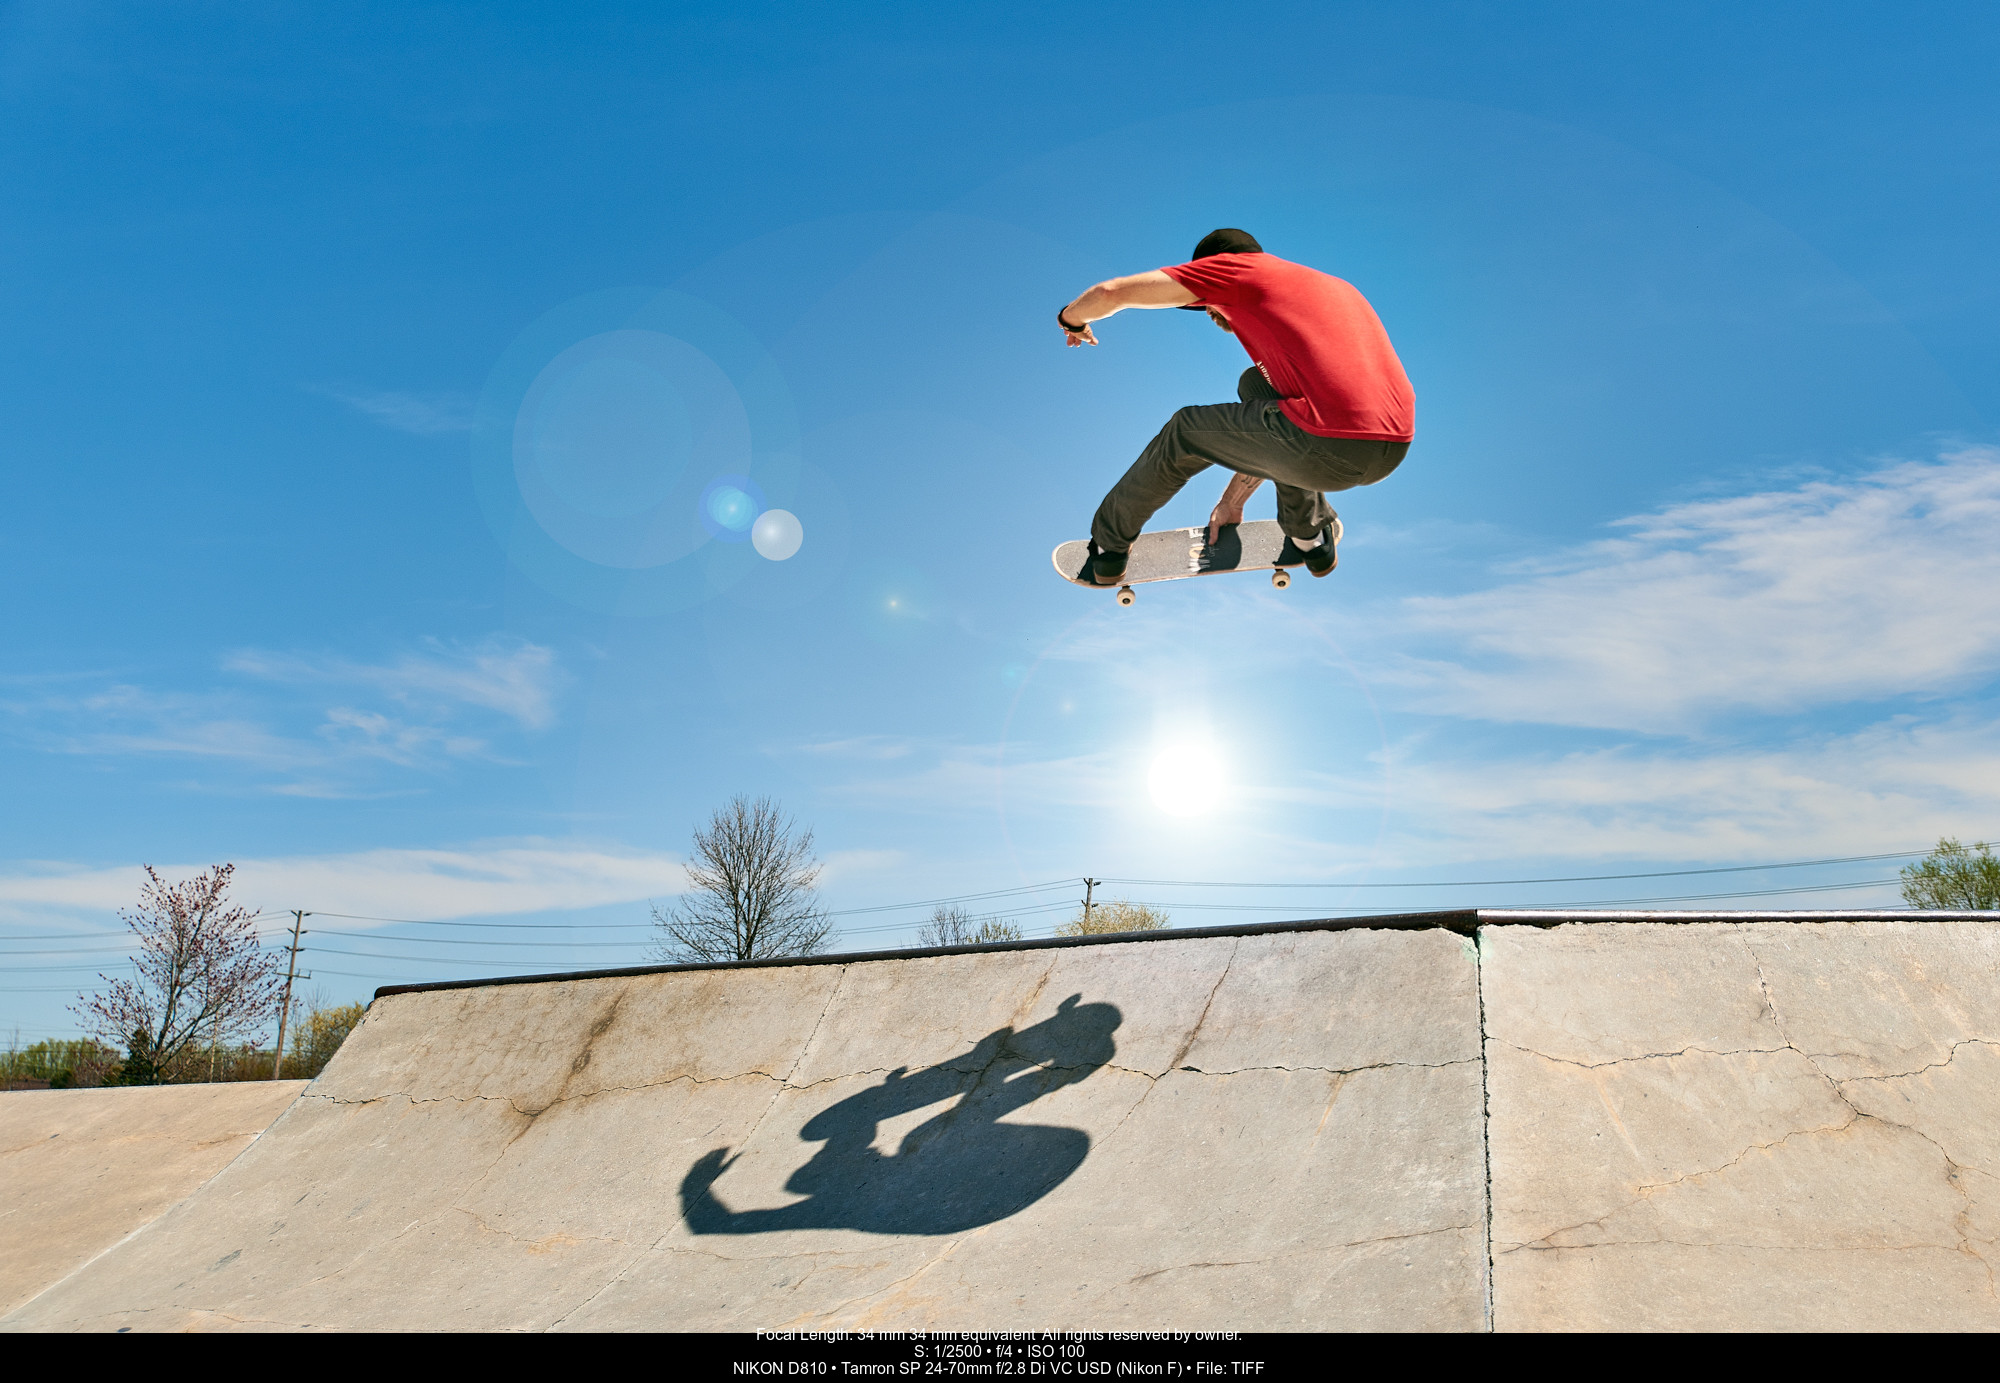 Skateboarder with Smoke Grenades - PHOTONews Magazine